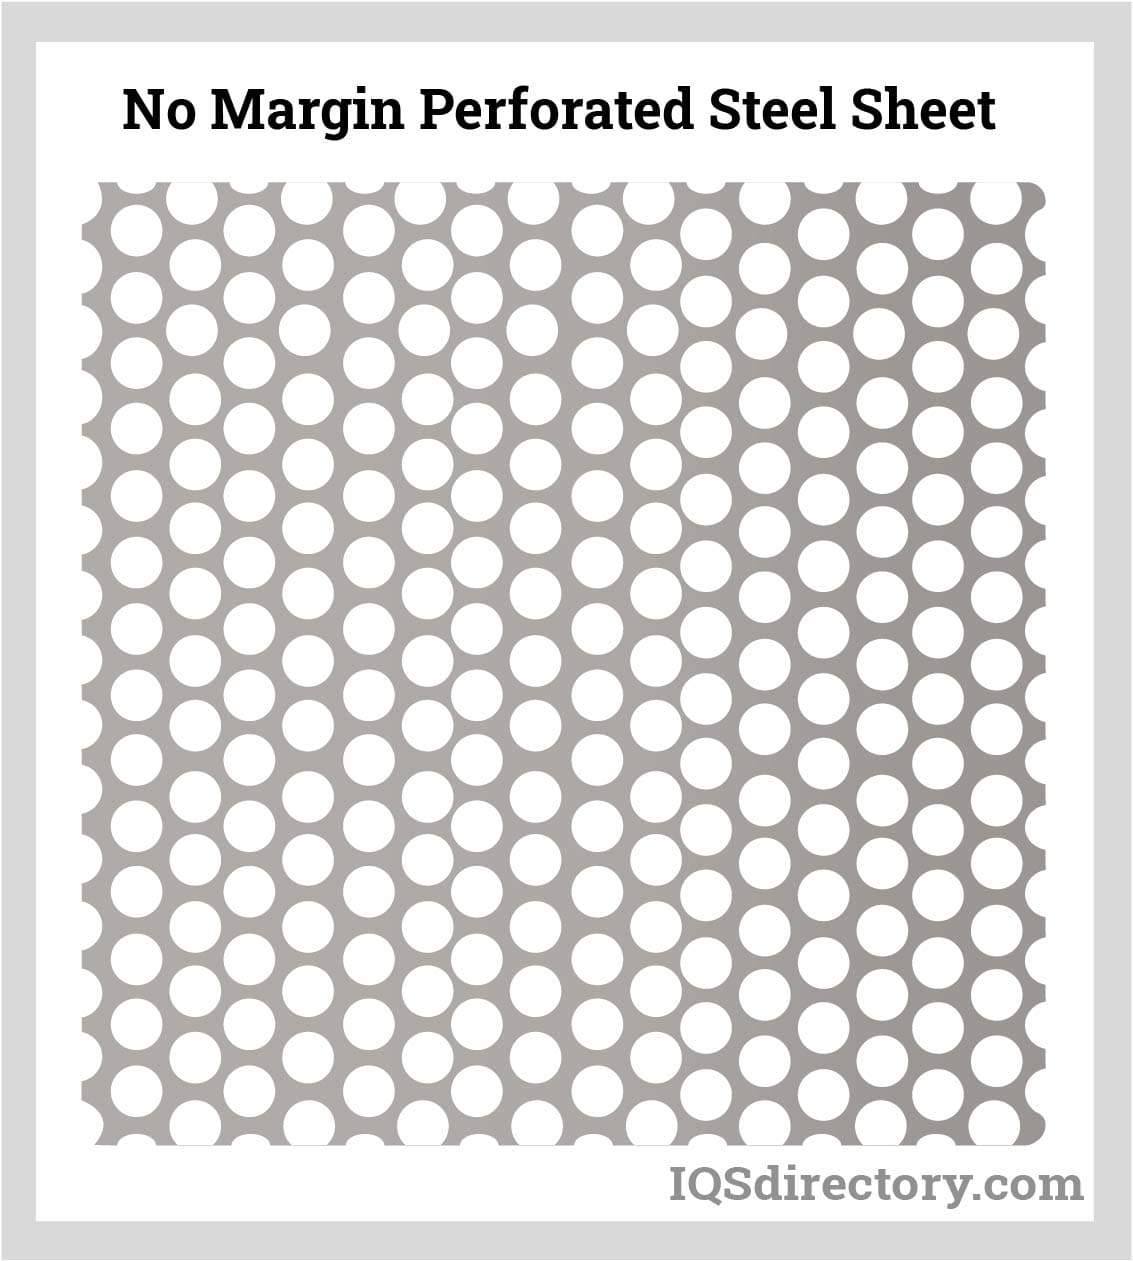 No Margin Perforated Steel Sheet